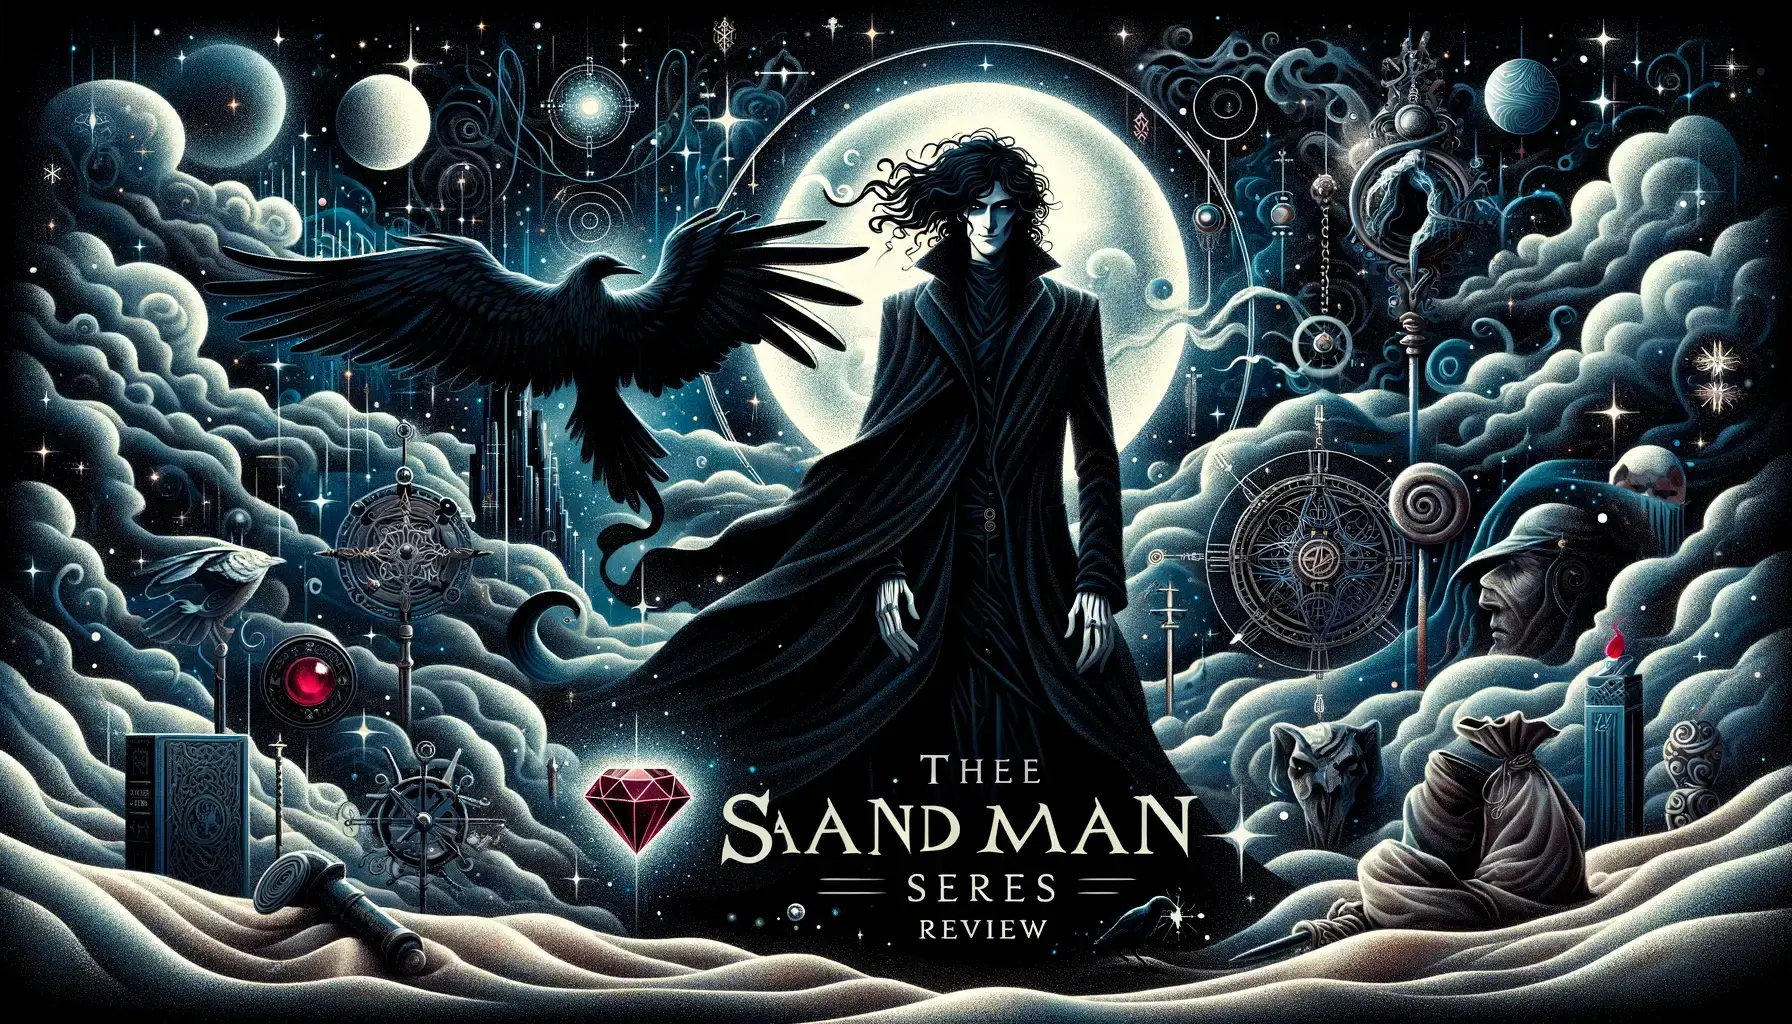 The Sandman series review